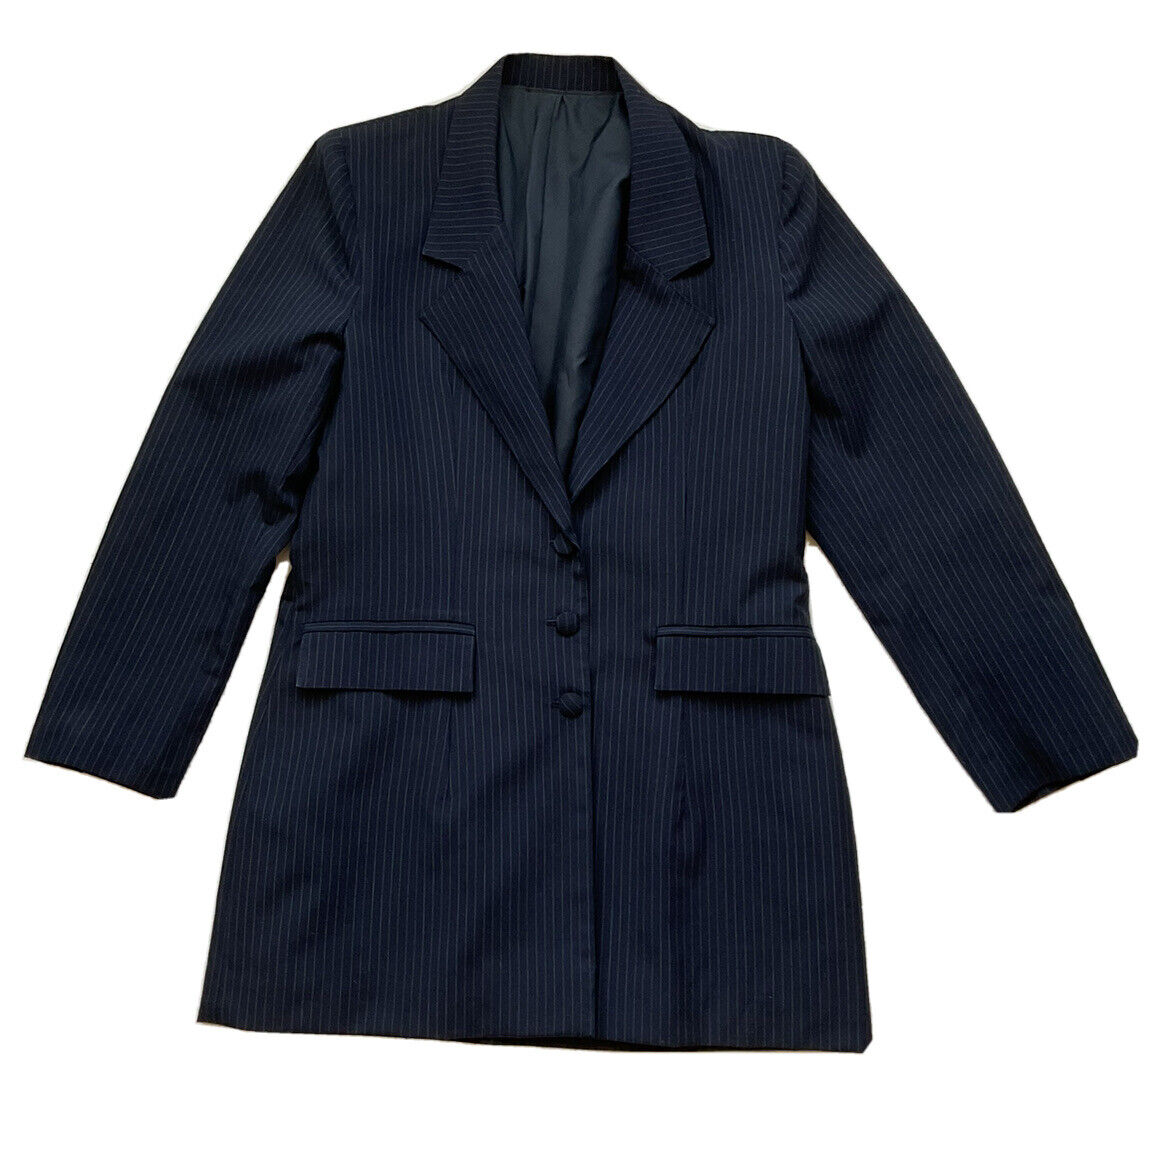 women's Navy dress jacket/vest S - image 1